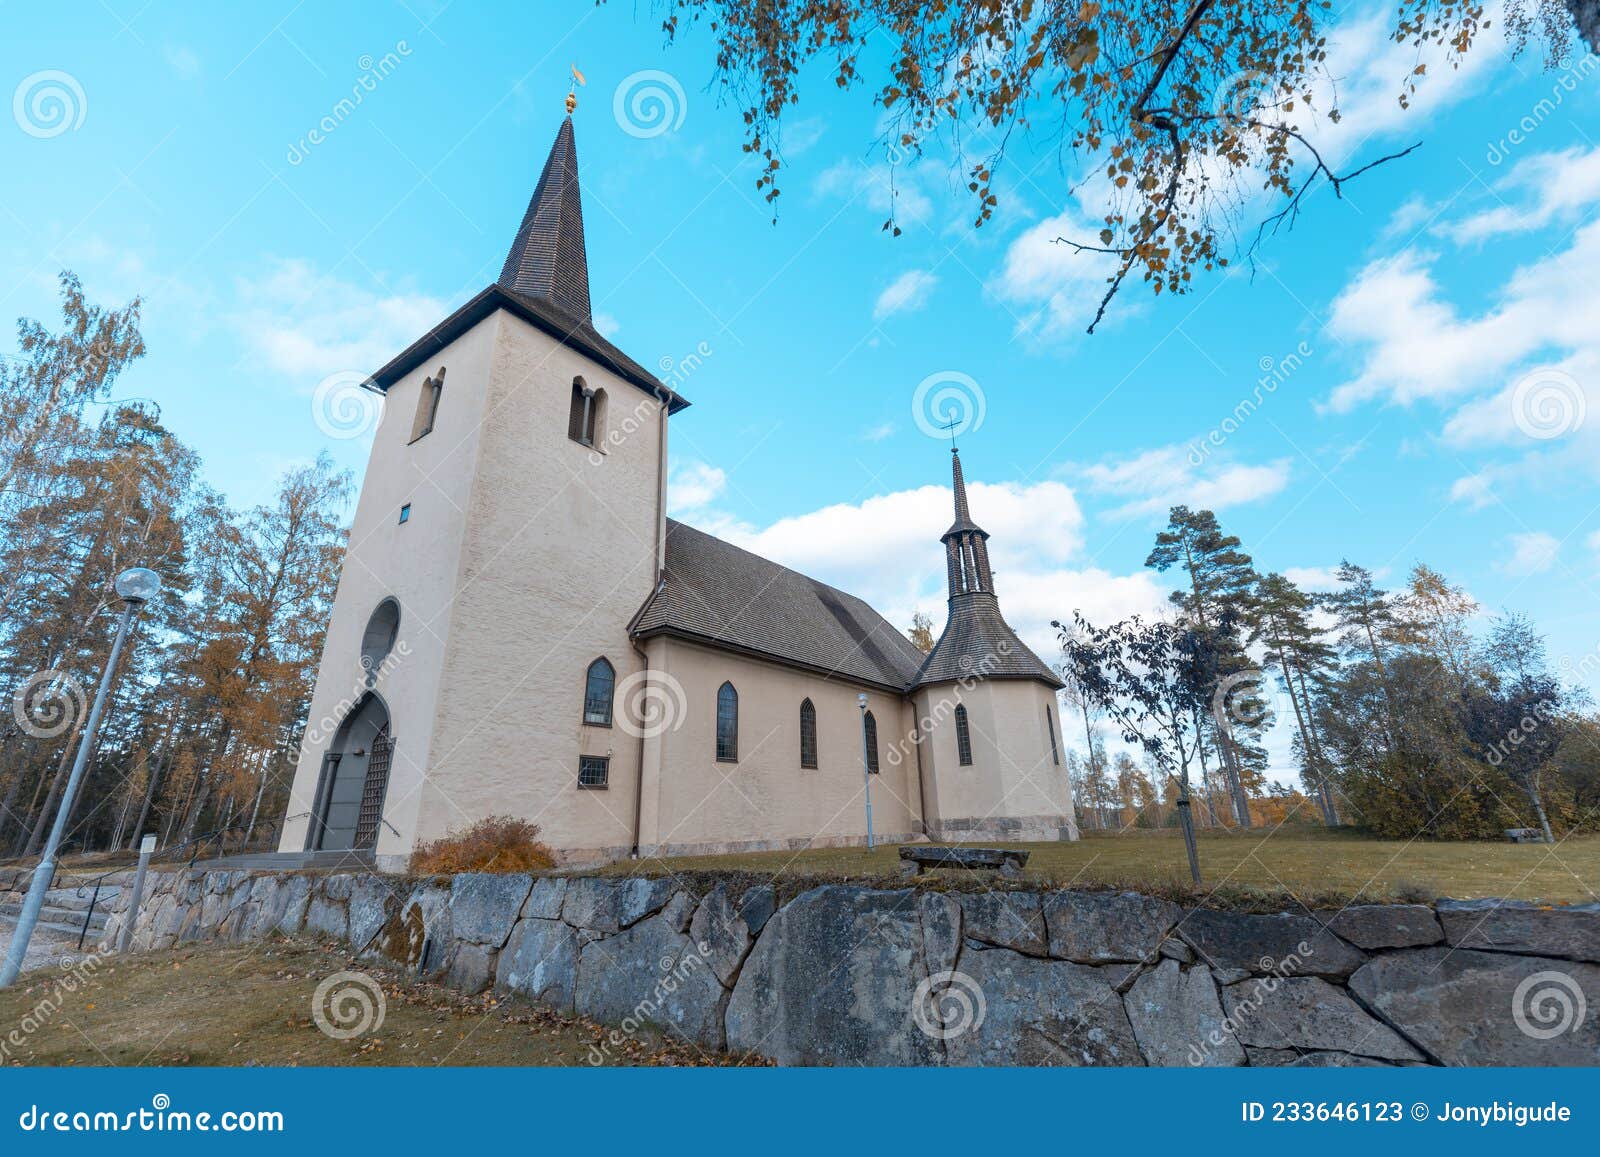 ohs church in vÃÂ¤rnamo, sweden